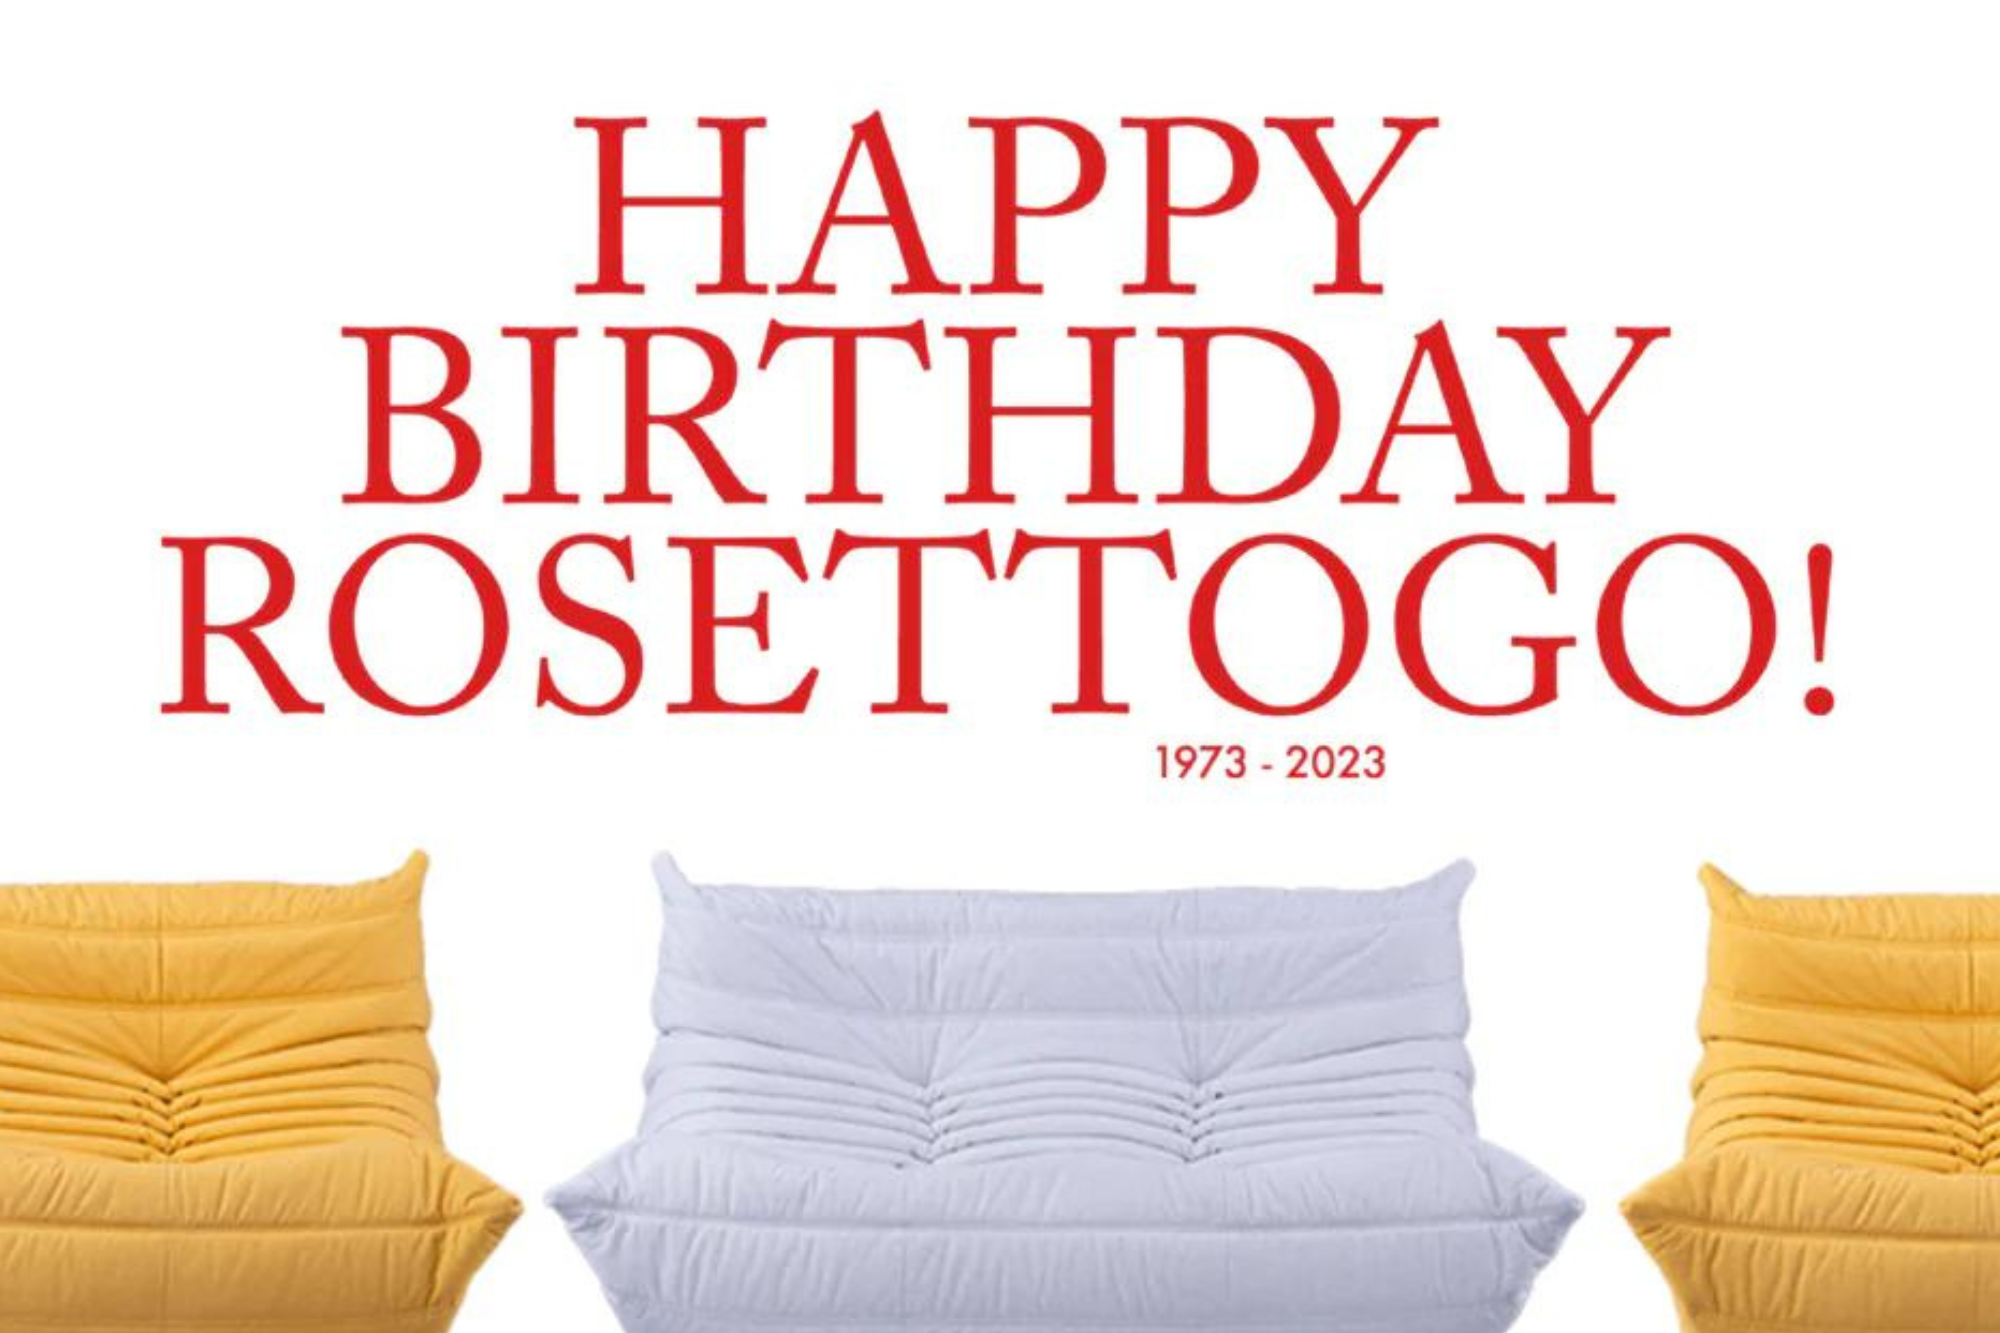 ROSETTogo 50th Anniversary 第二弾